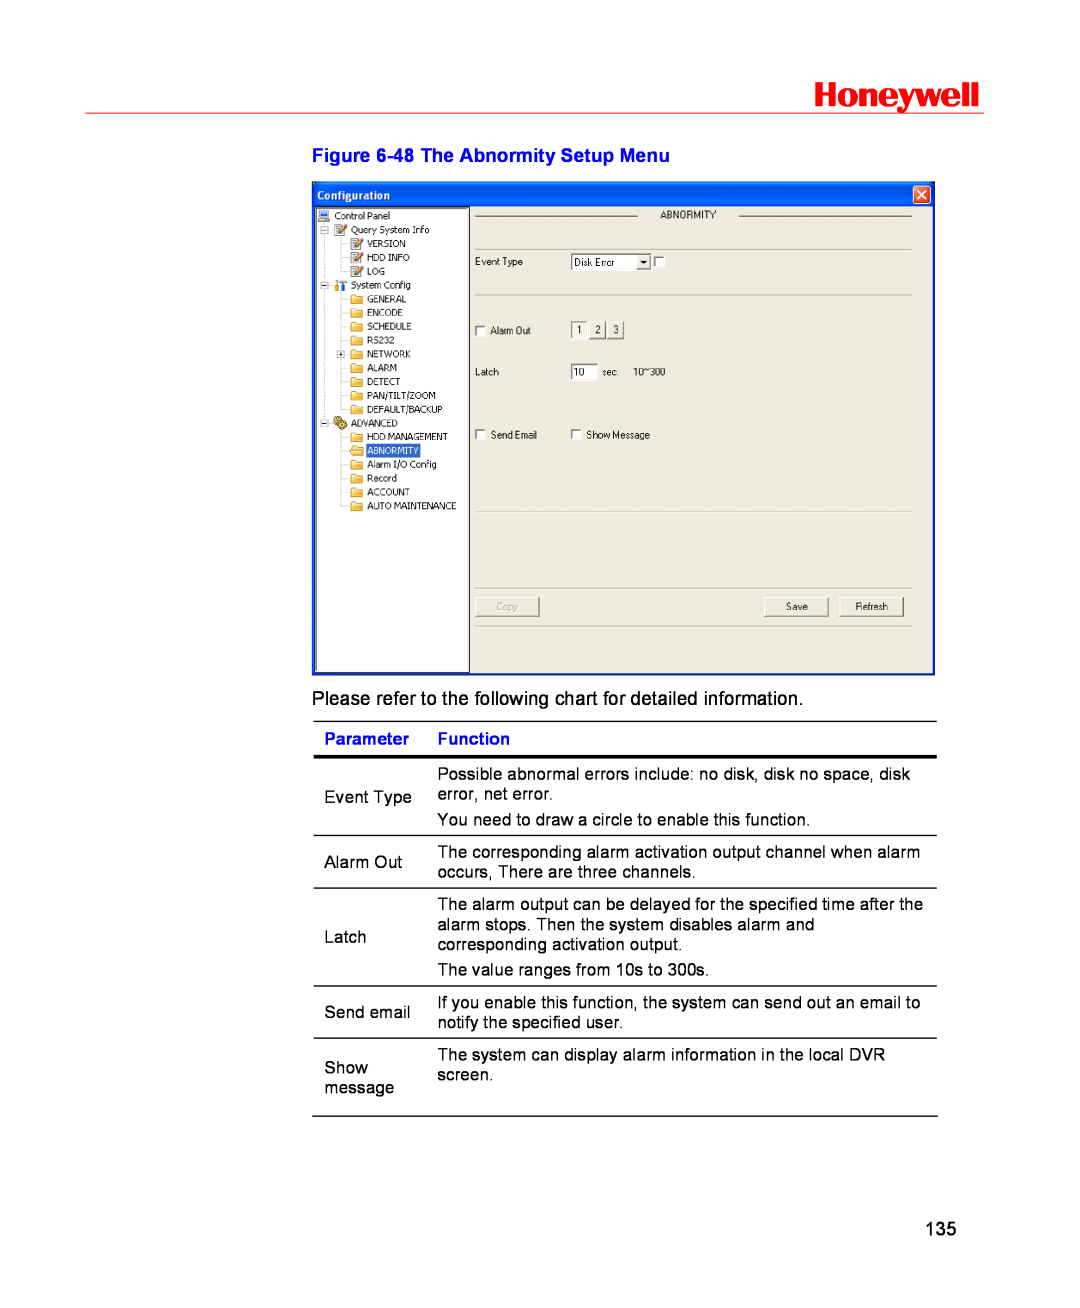 Honeywell HSVR-16, HSVR-04 user manual Honeywell, 48 The Abnormity Setup Menu, Parameter, Function 